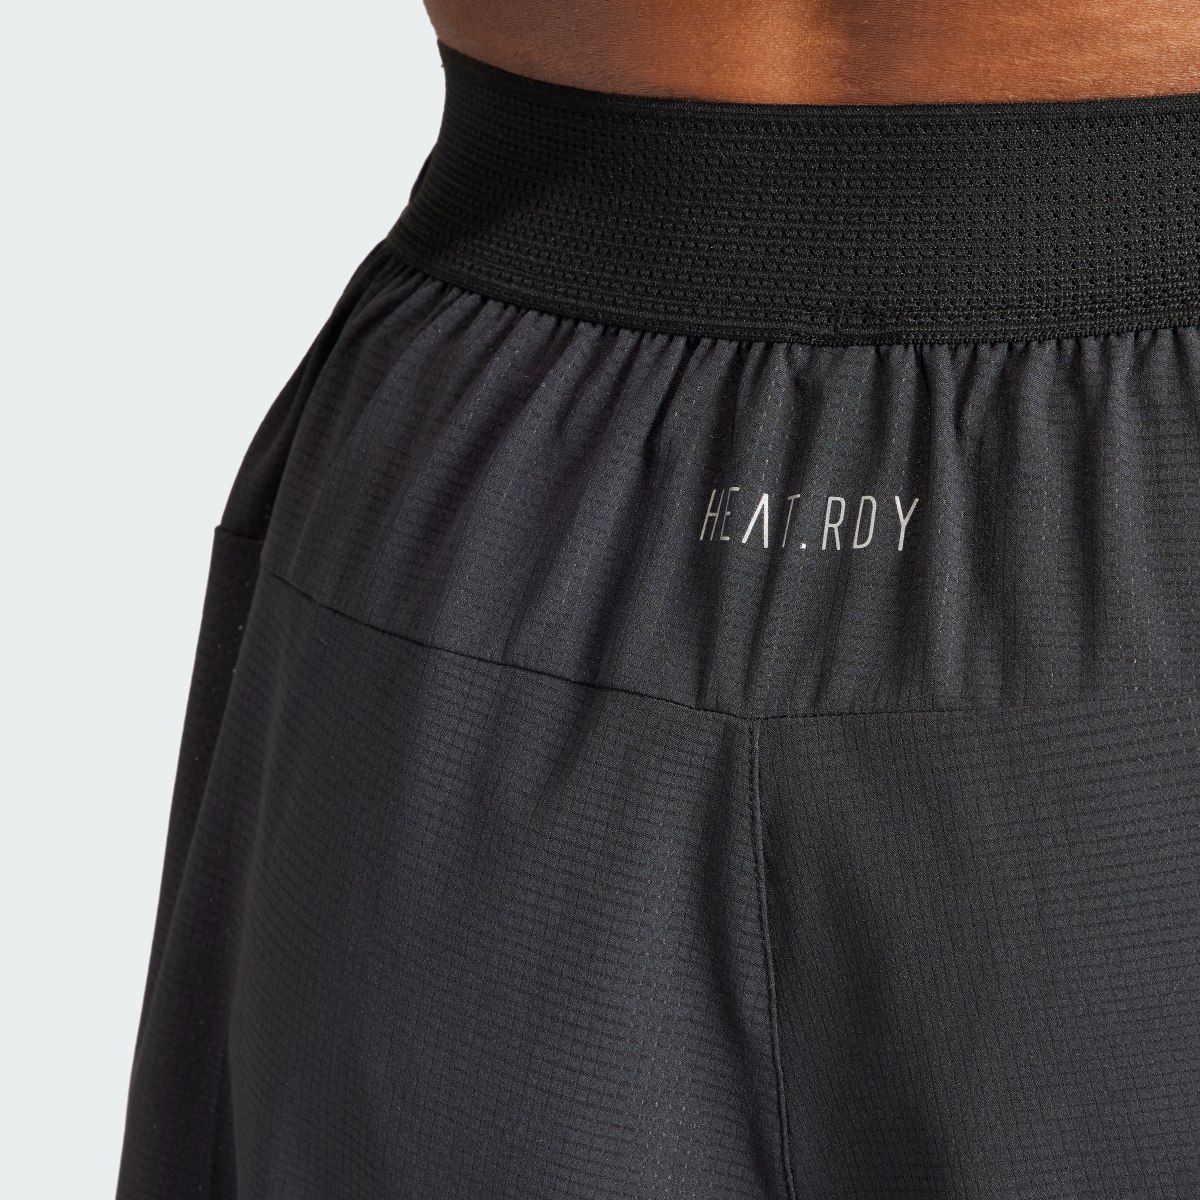 Adidas Shorts Designed For Training HEAT.RDY HIIT. 6